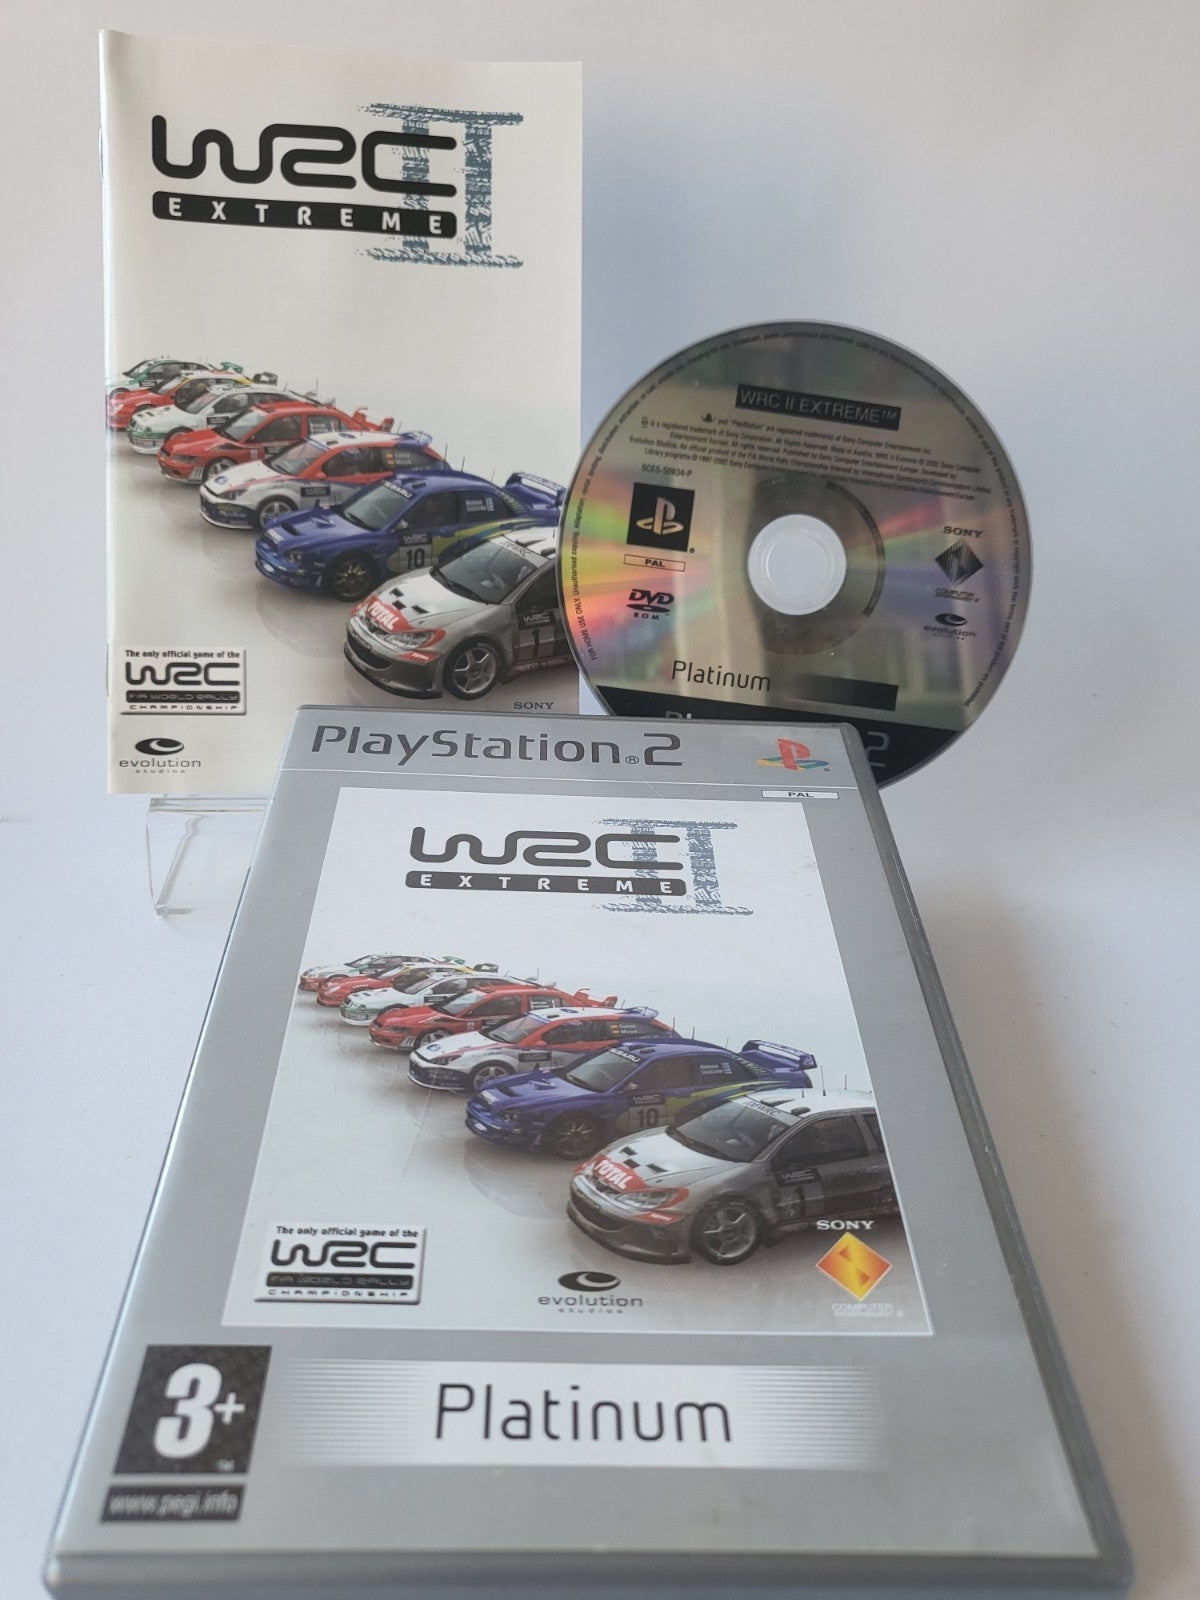 WRC II Extreme Platinum Edition Playstation 2